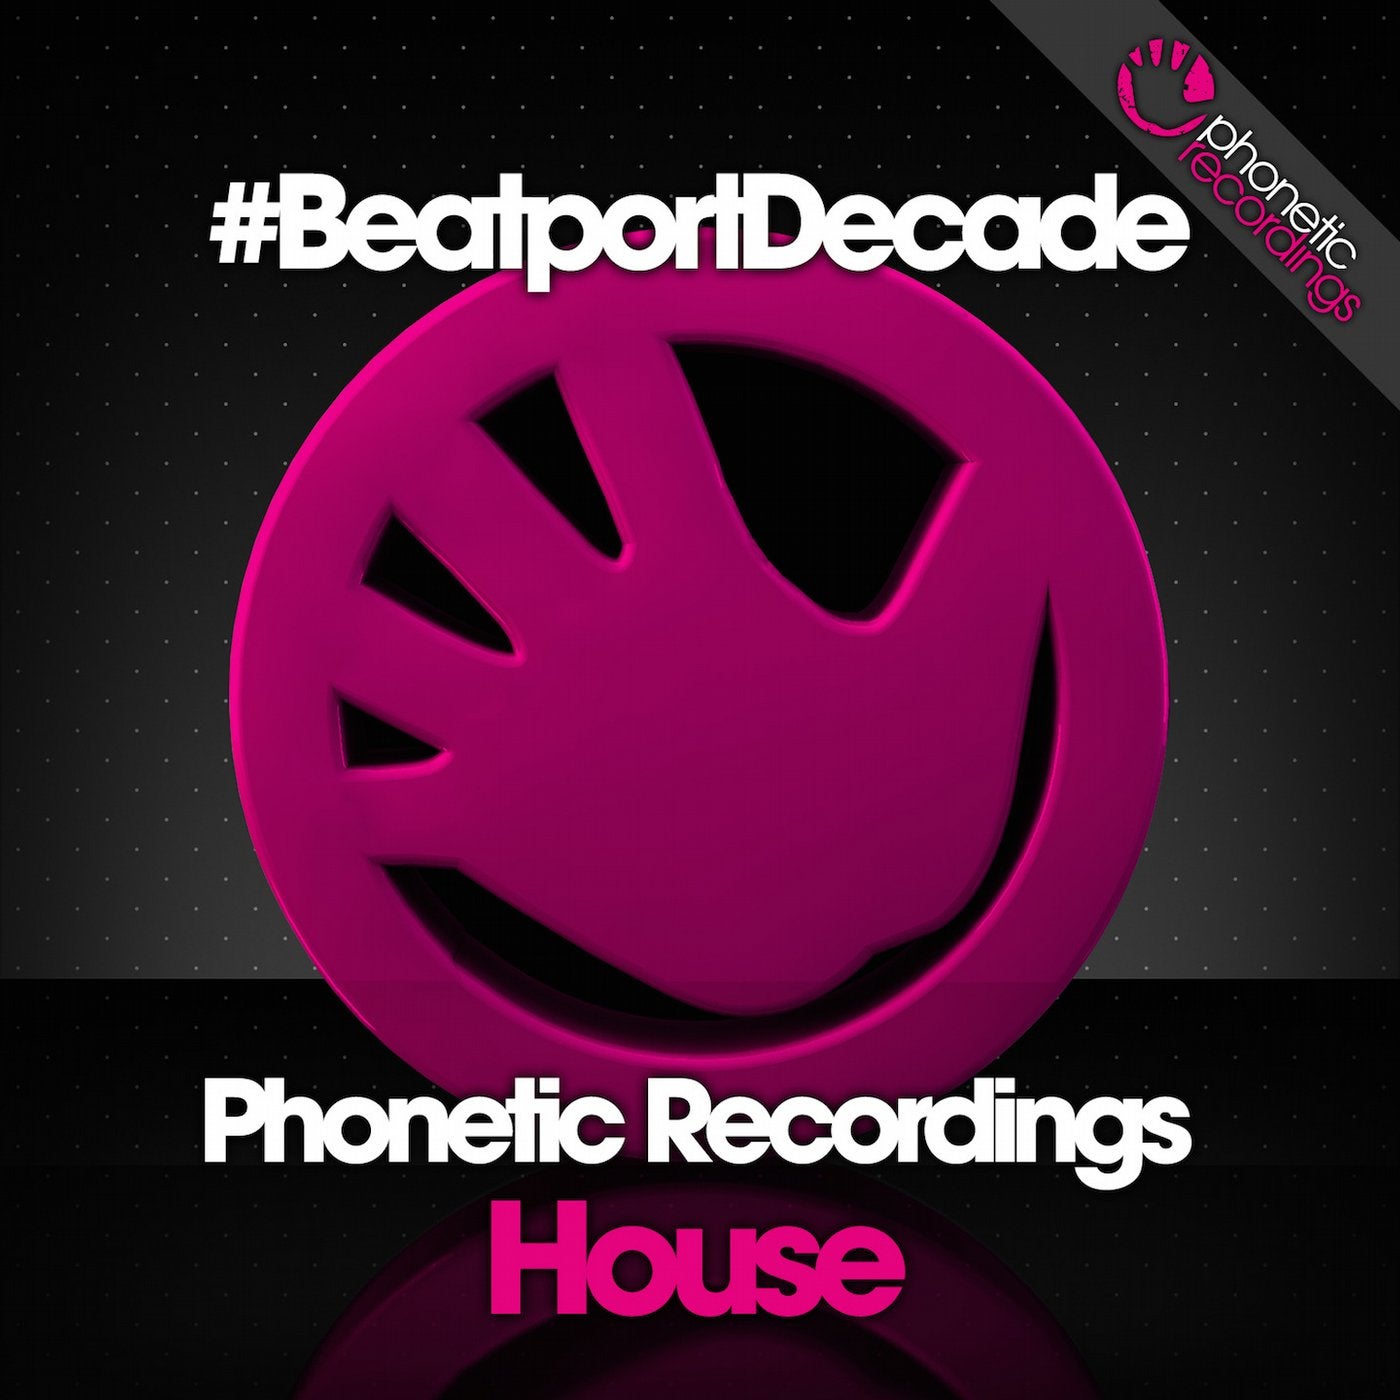 Phonetic Recordings #BeatportDecade House